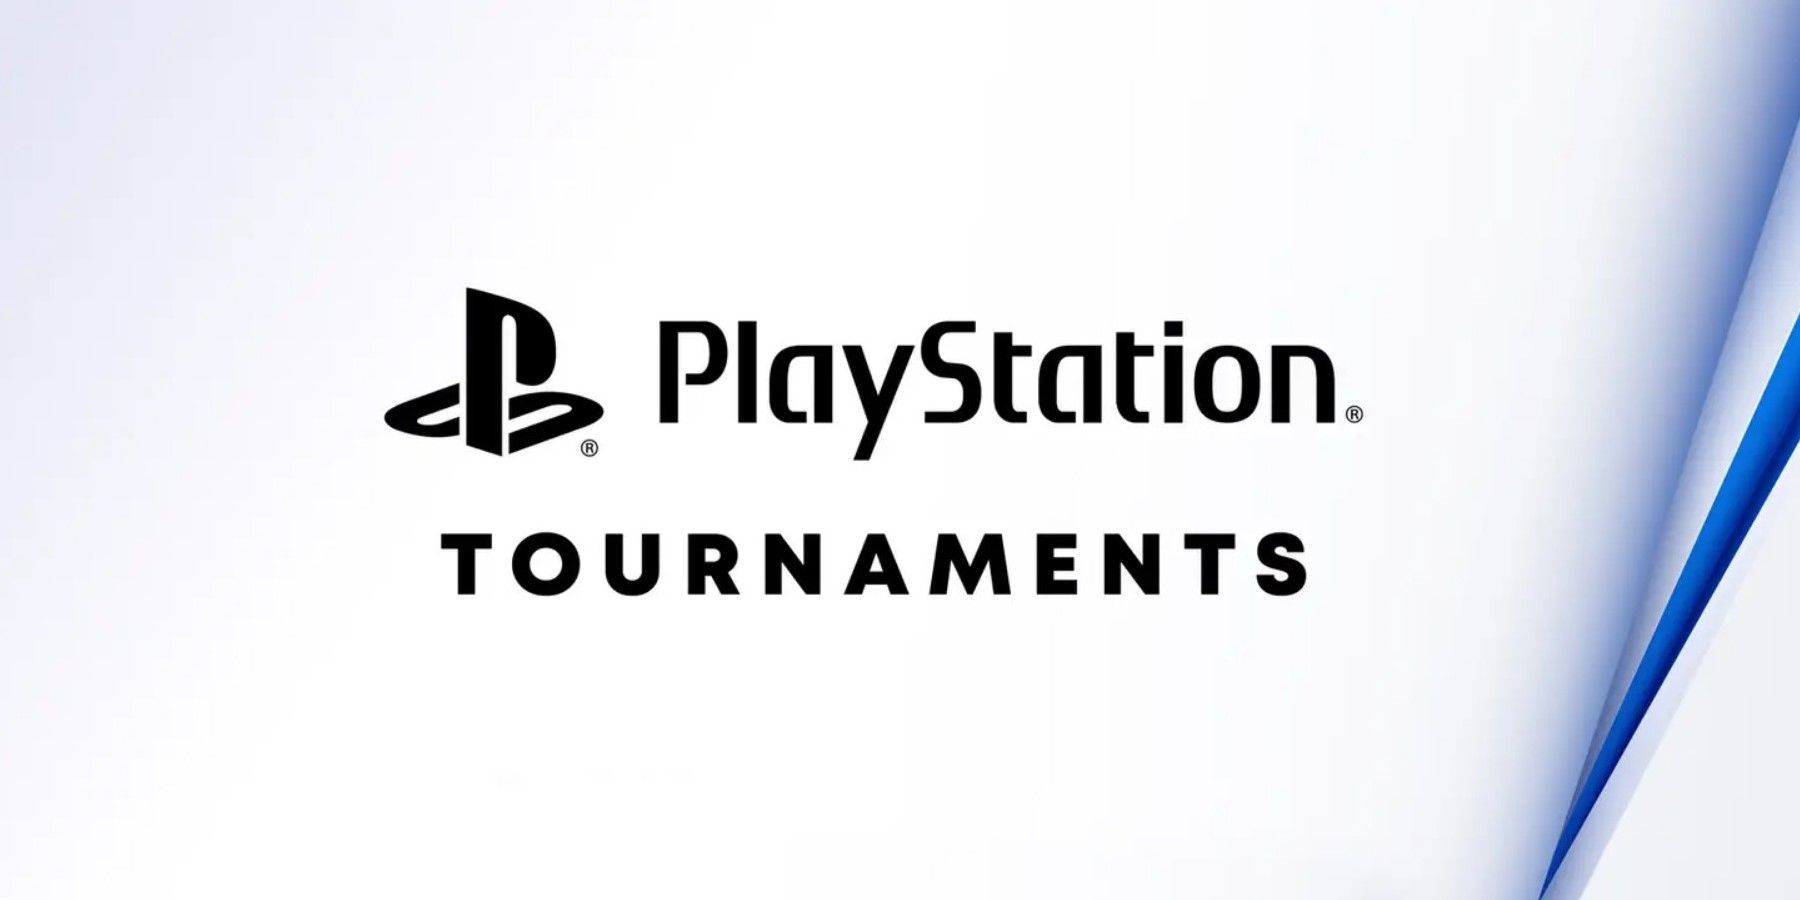 ps5-playstation-tournaments-logo